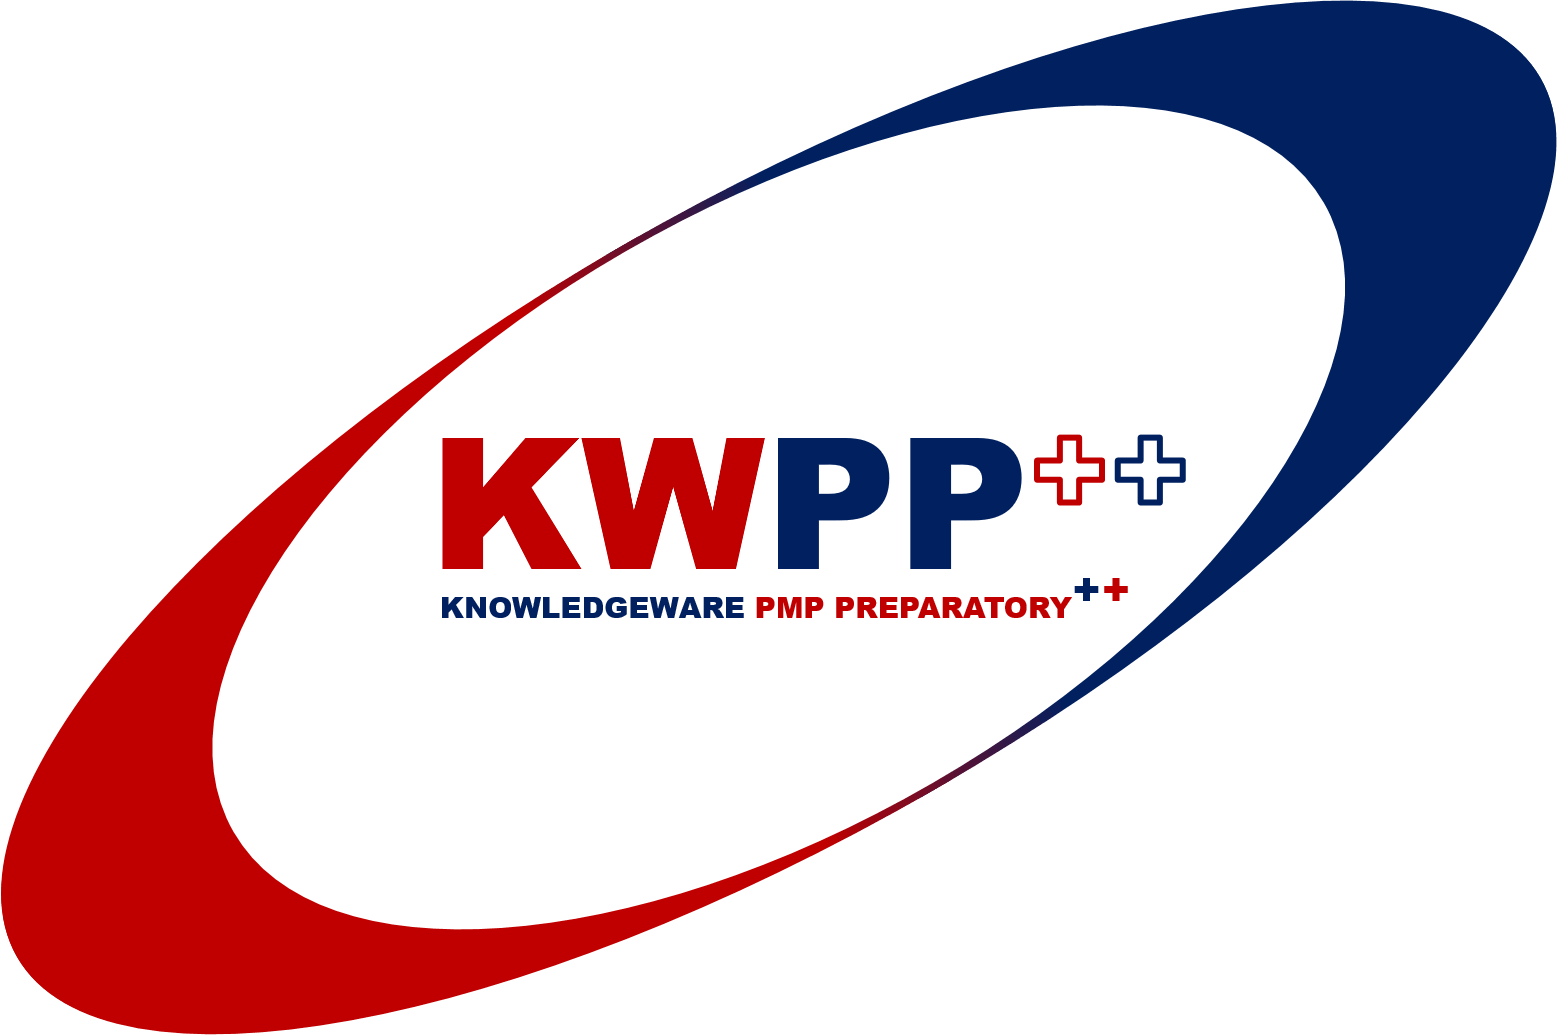 KWPP++